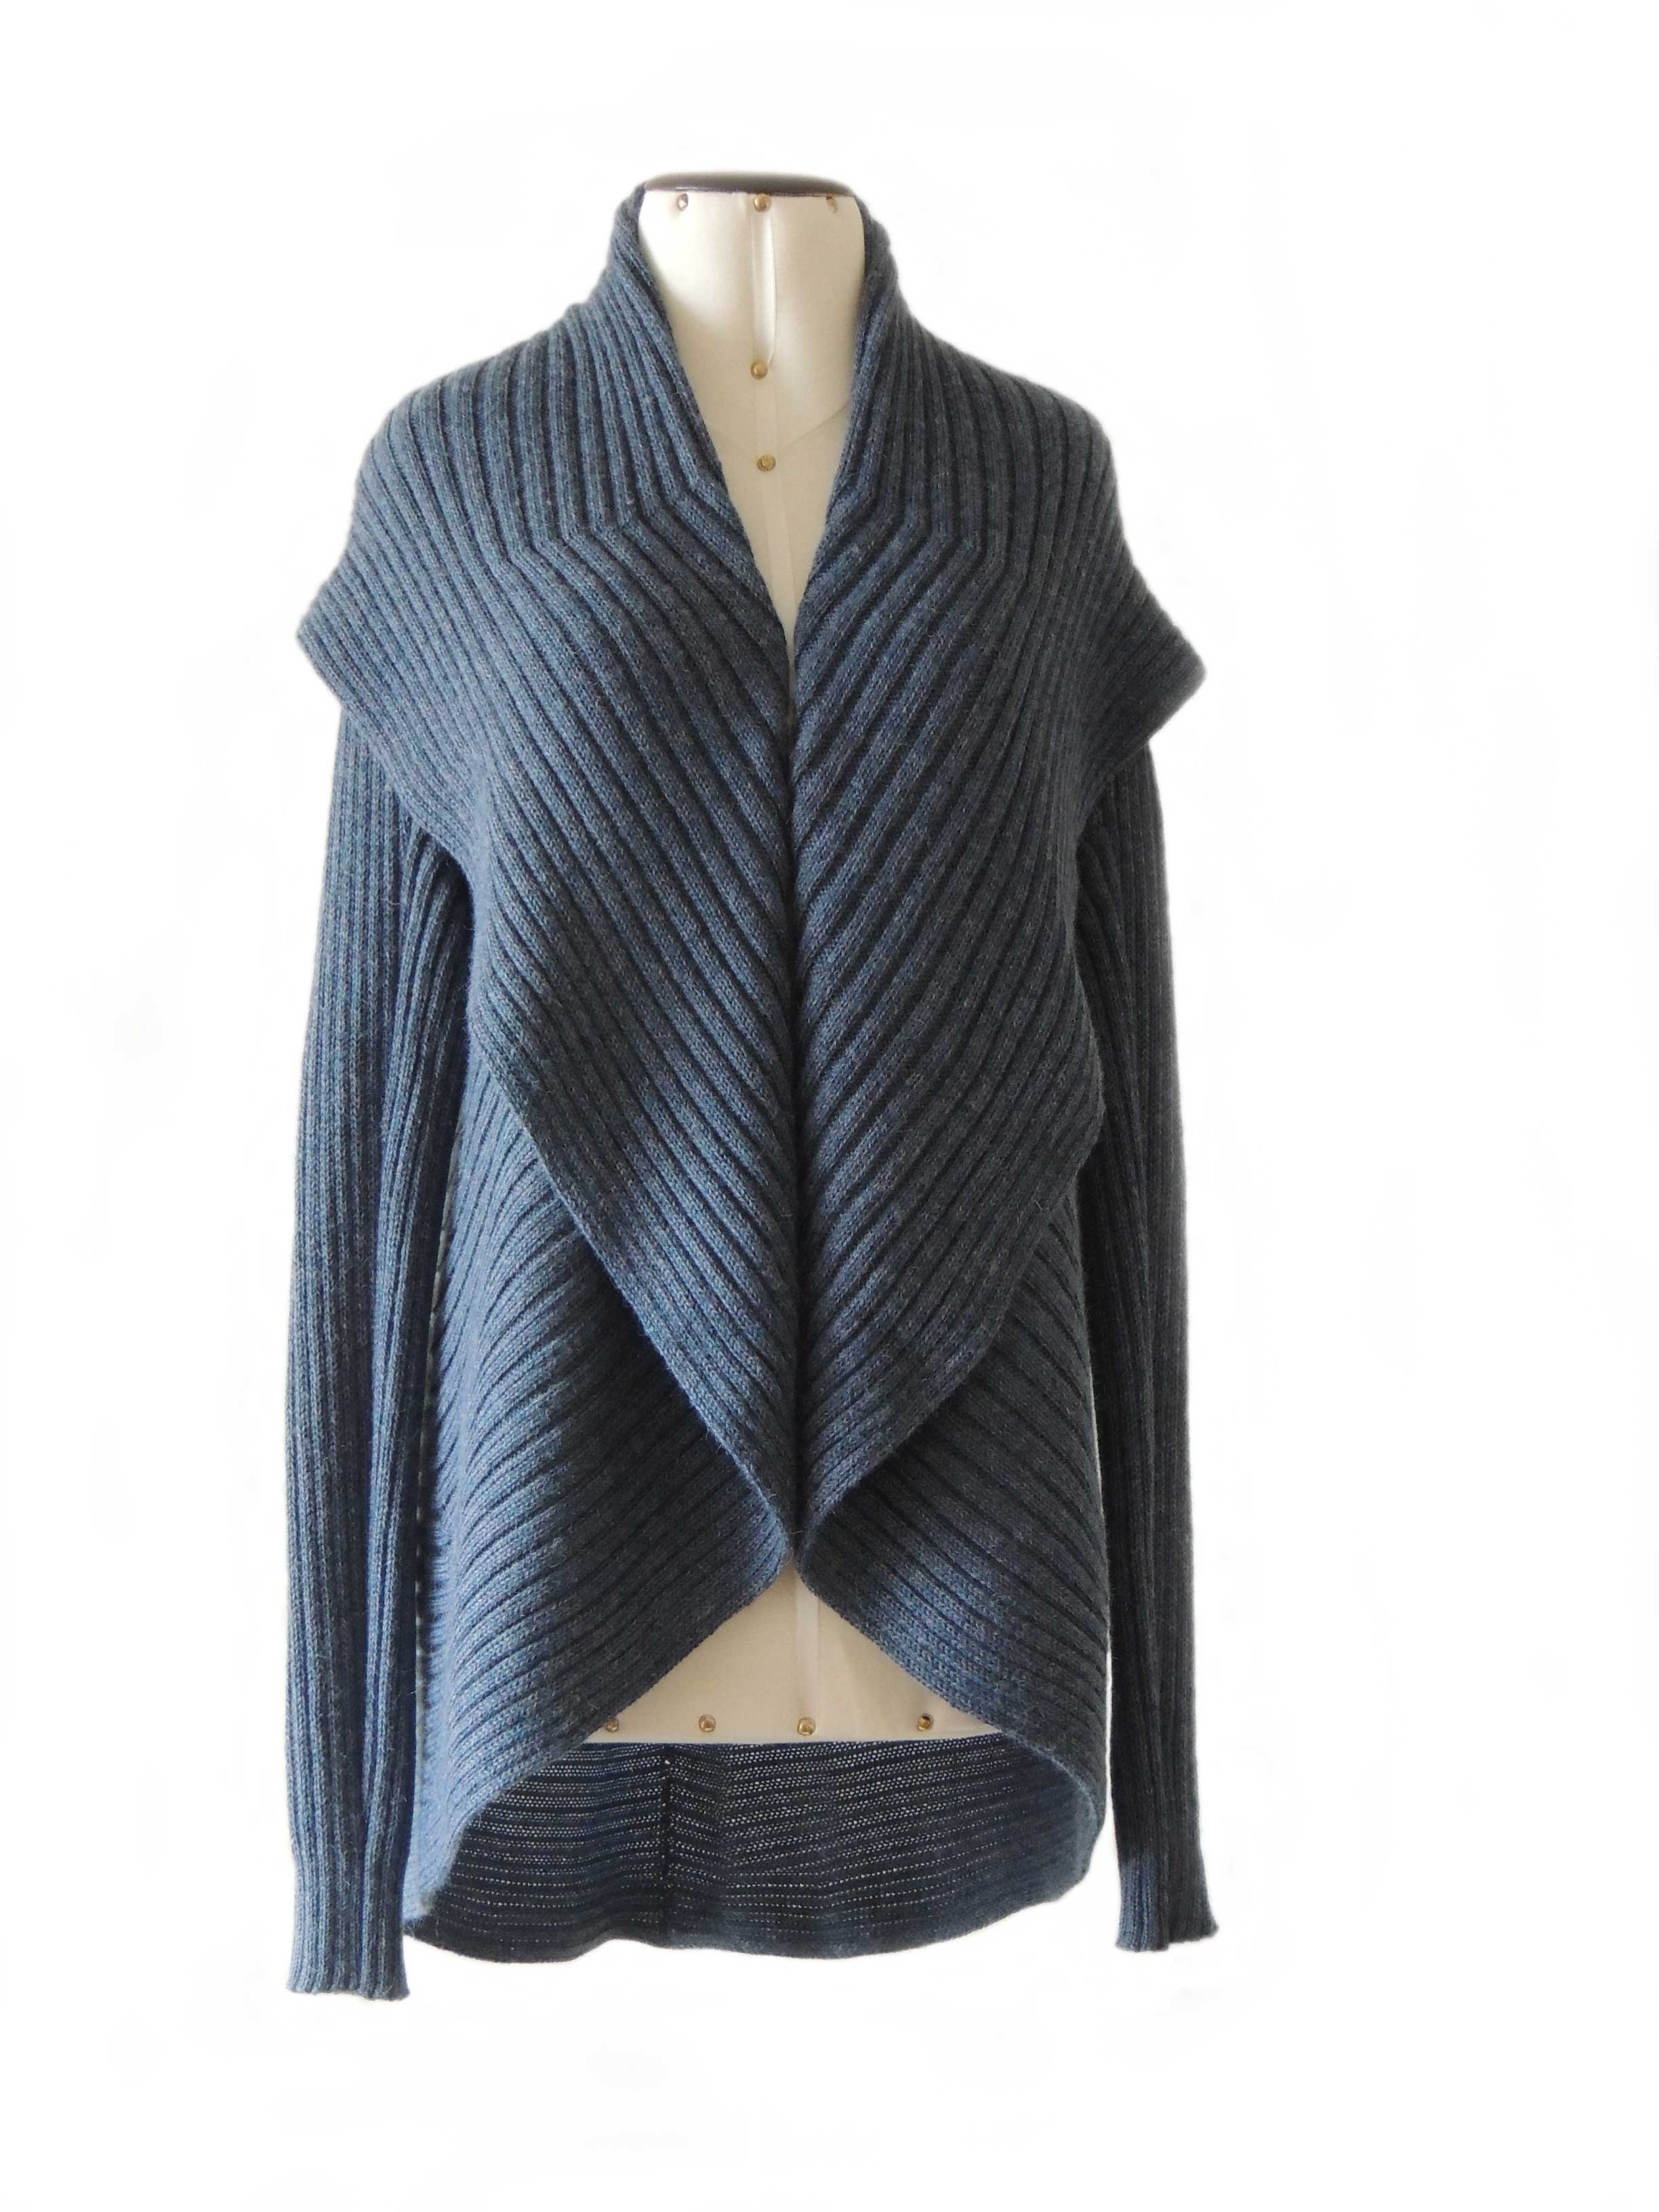 PFL Full knitted open cardigan model Keyla, in a soft alpaca blend, grey